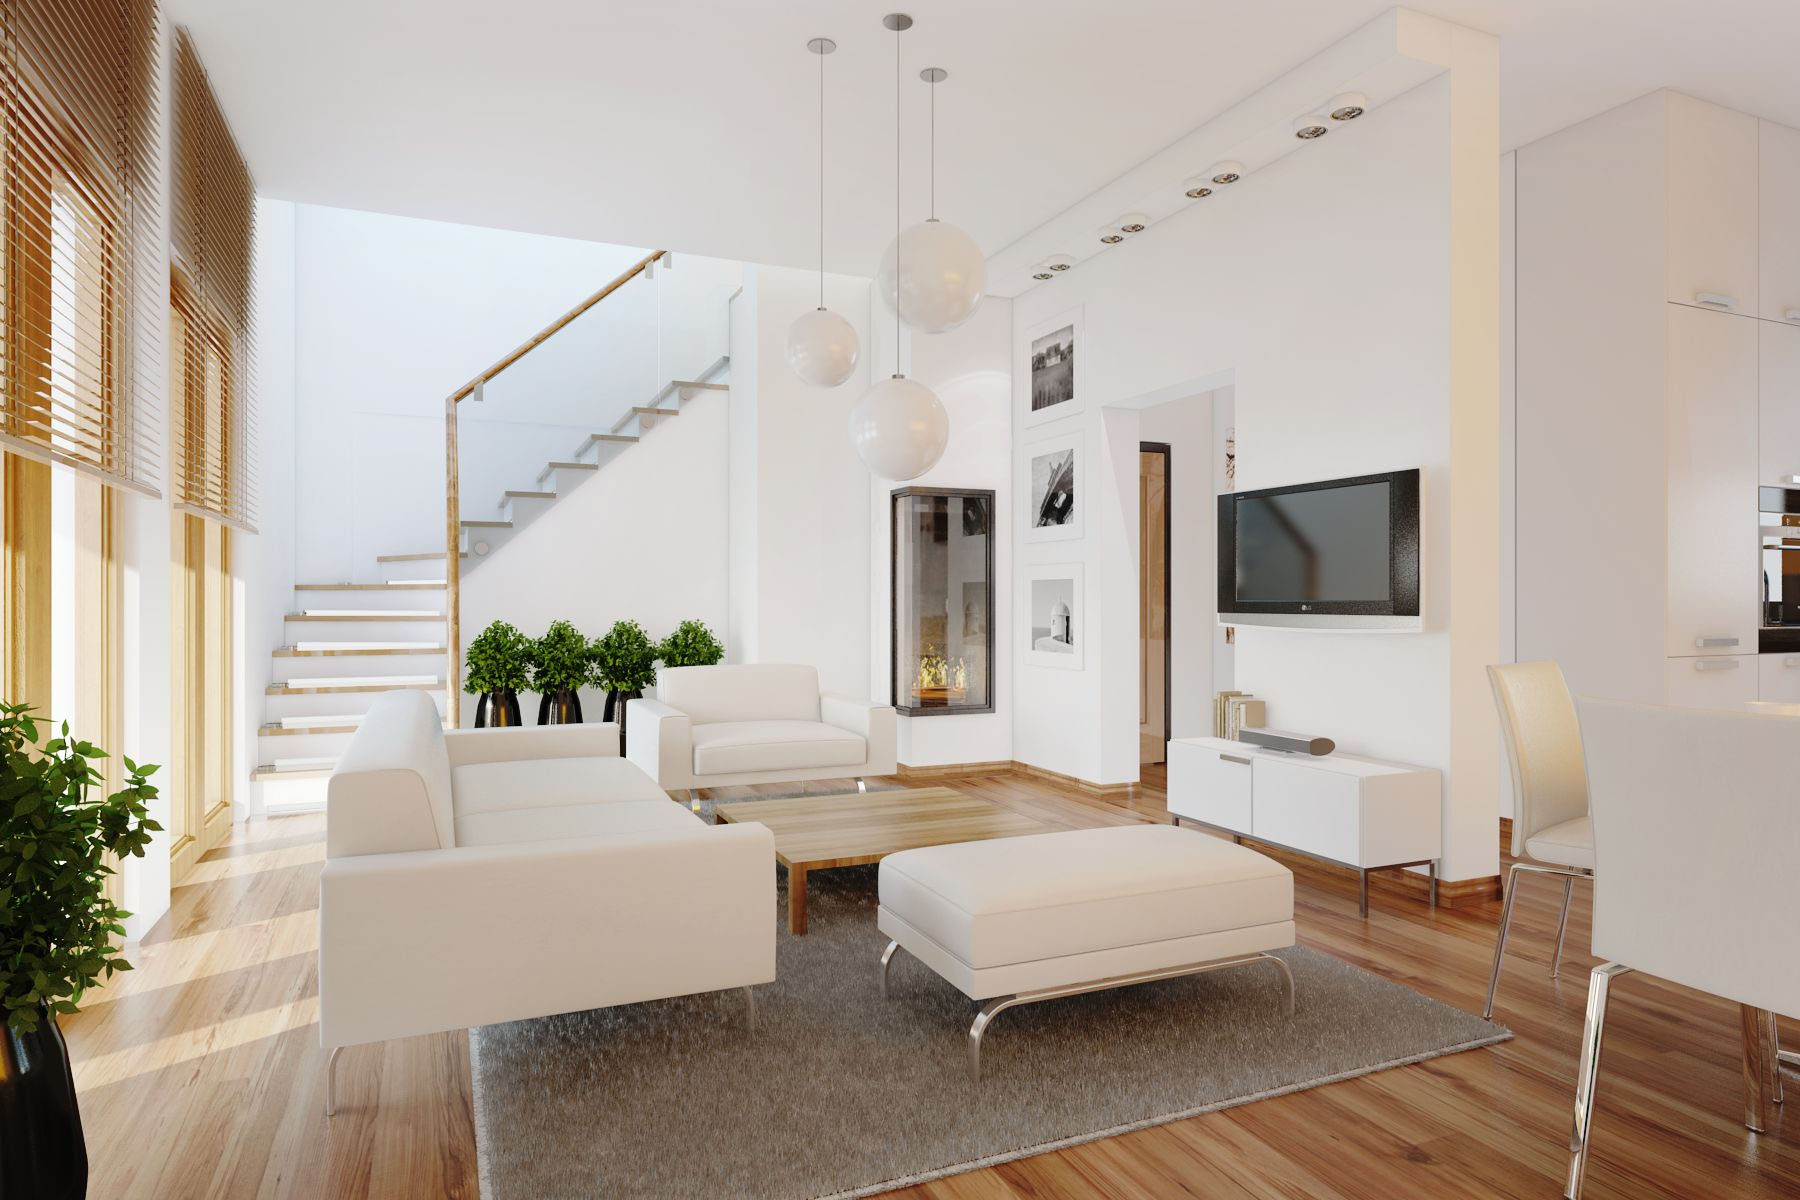 12 Dekorasi Ruang Tamu Minimalis Moden Sederhana Untuk Rumah Yang Mendamaikan Nurraysa